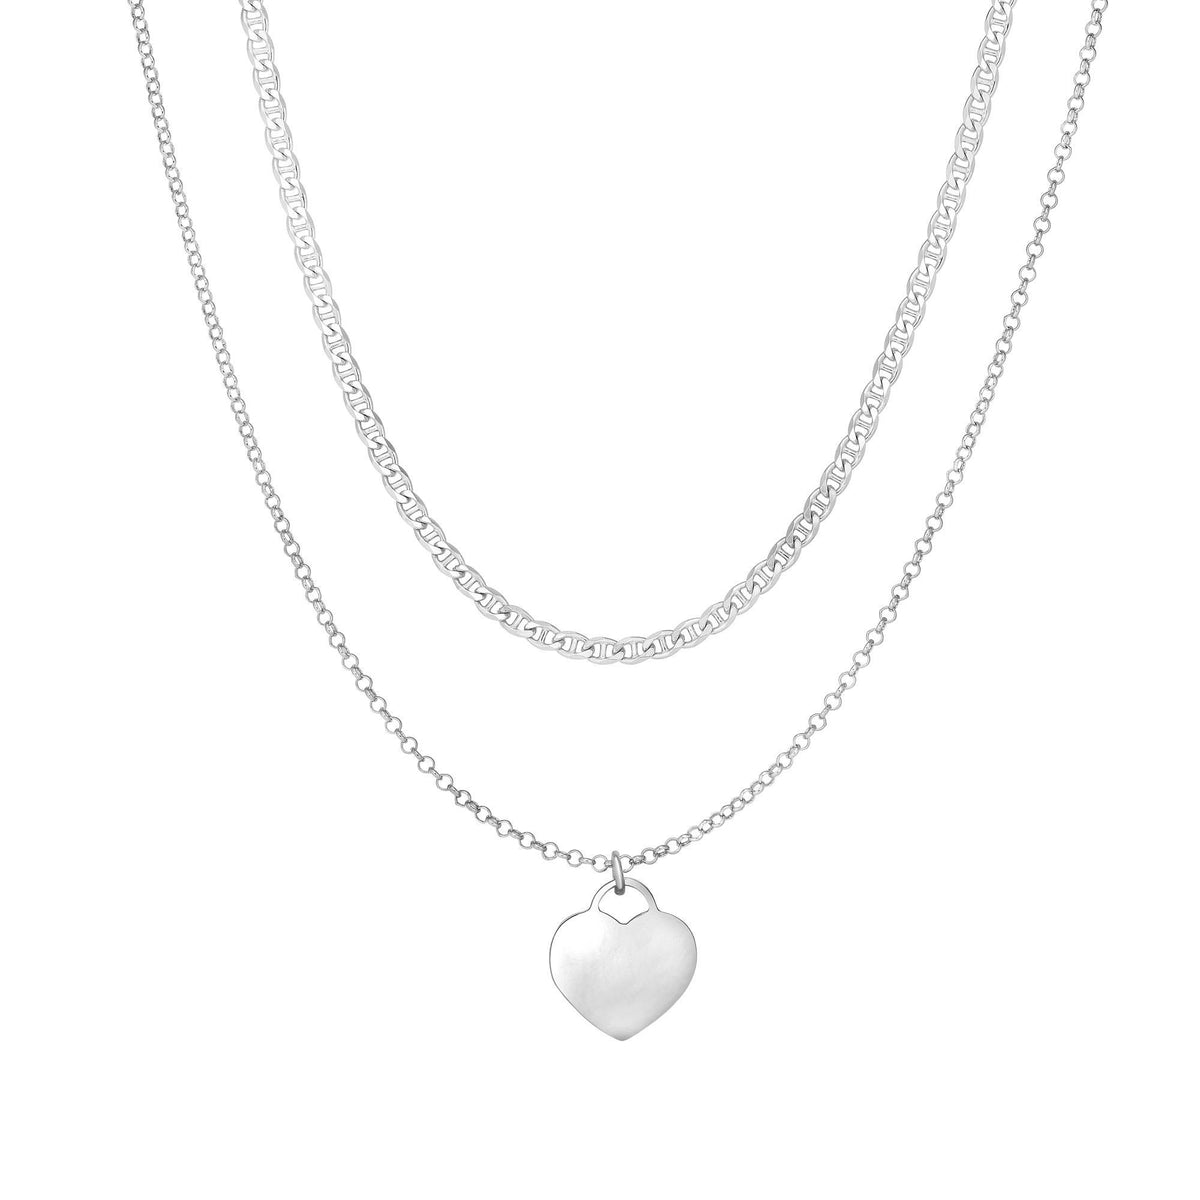 Sterling Silver Heart Pendant Choker Necklace, 16"